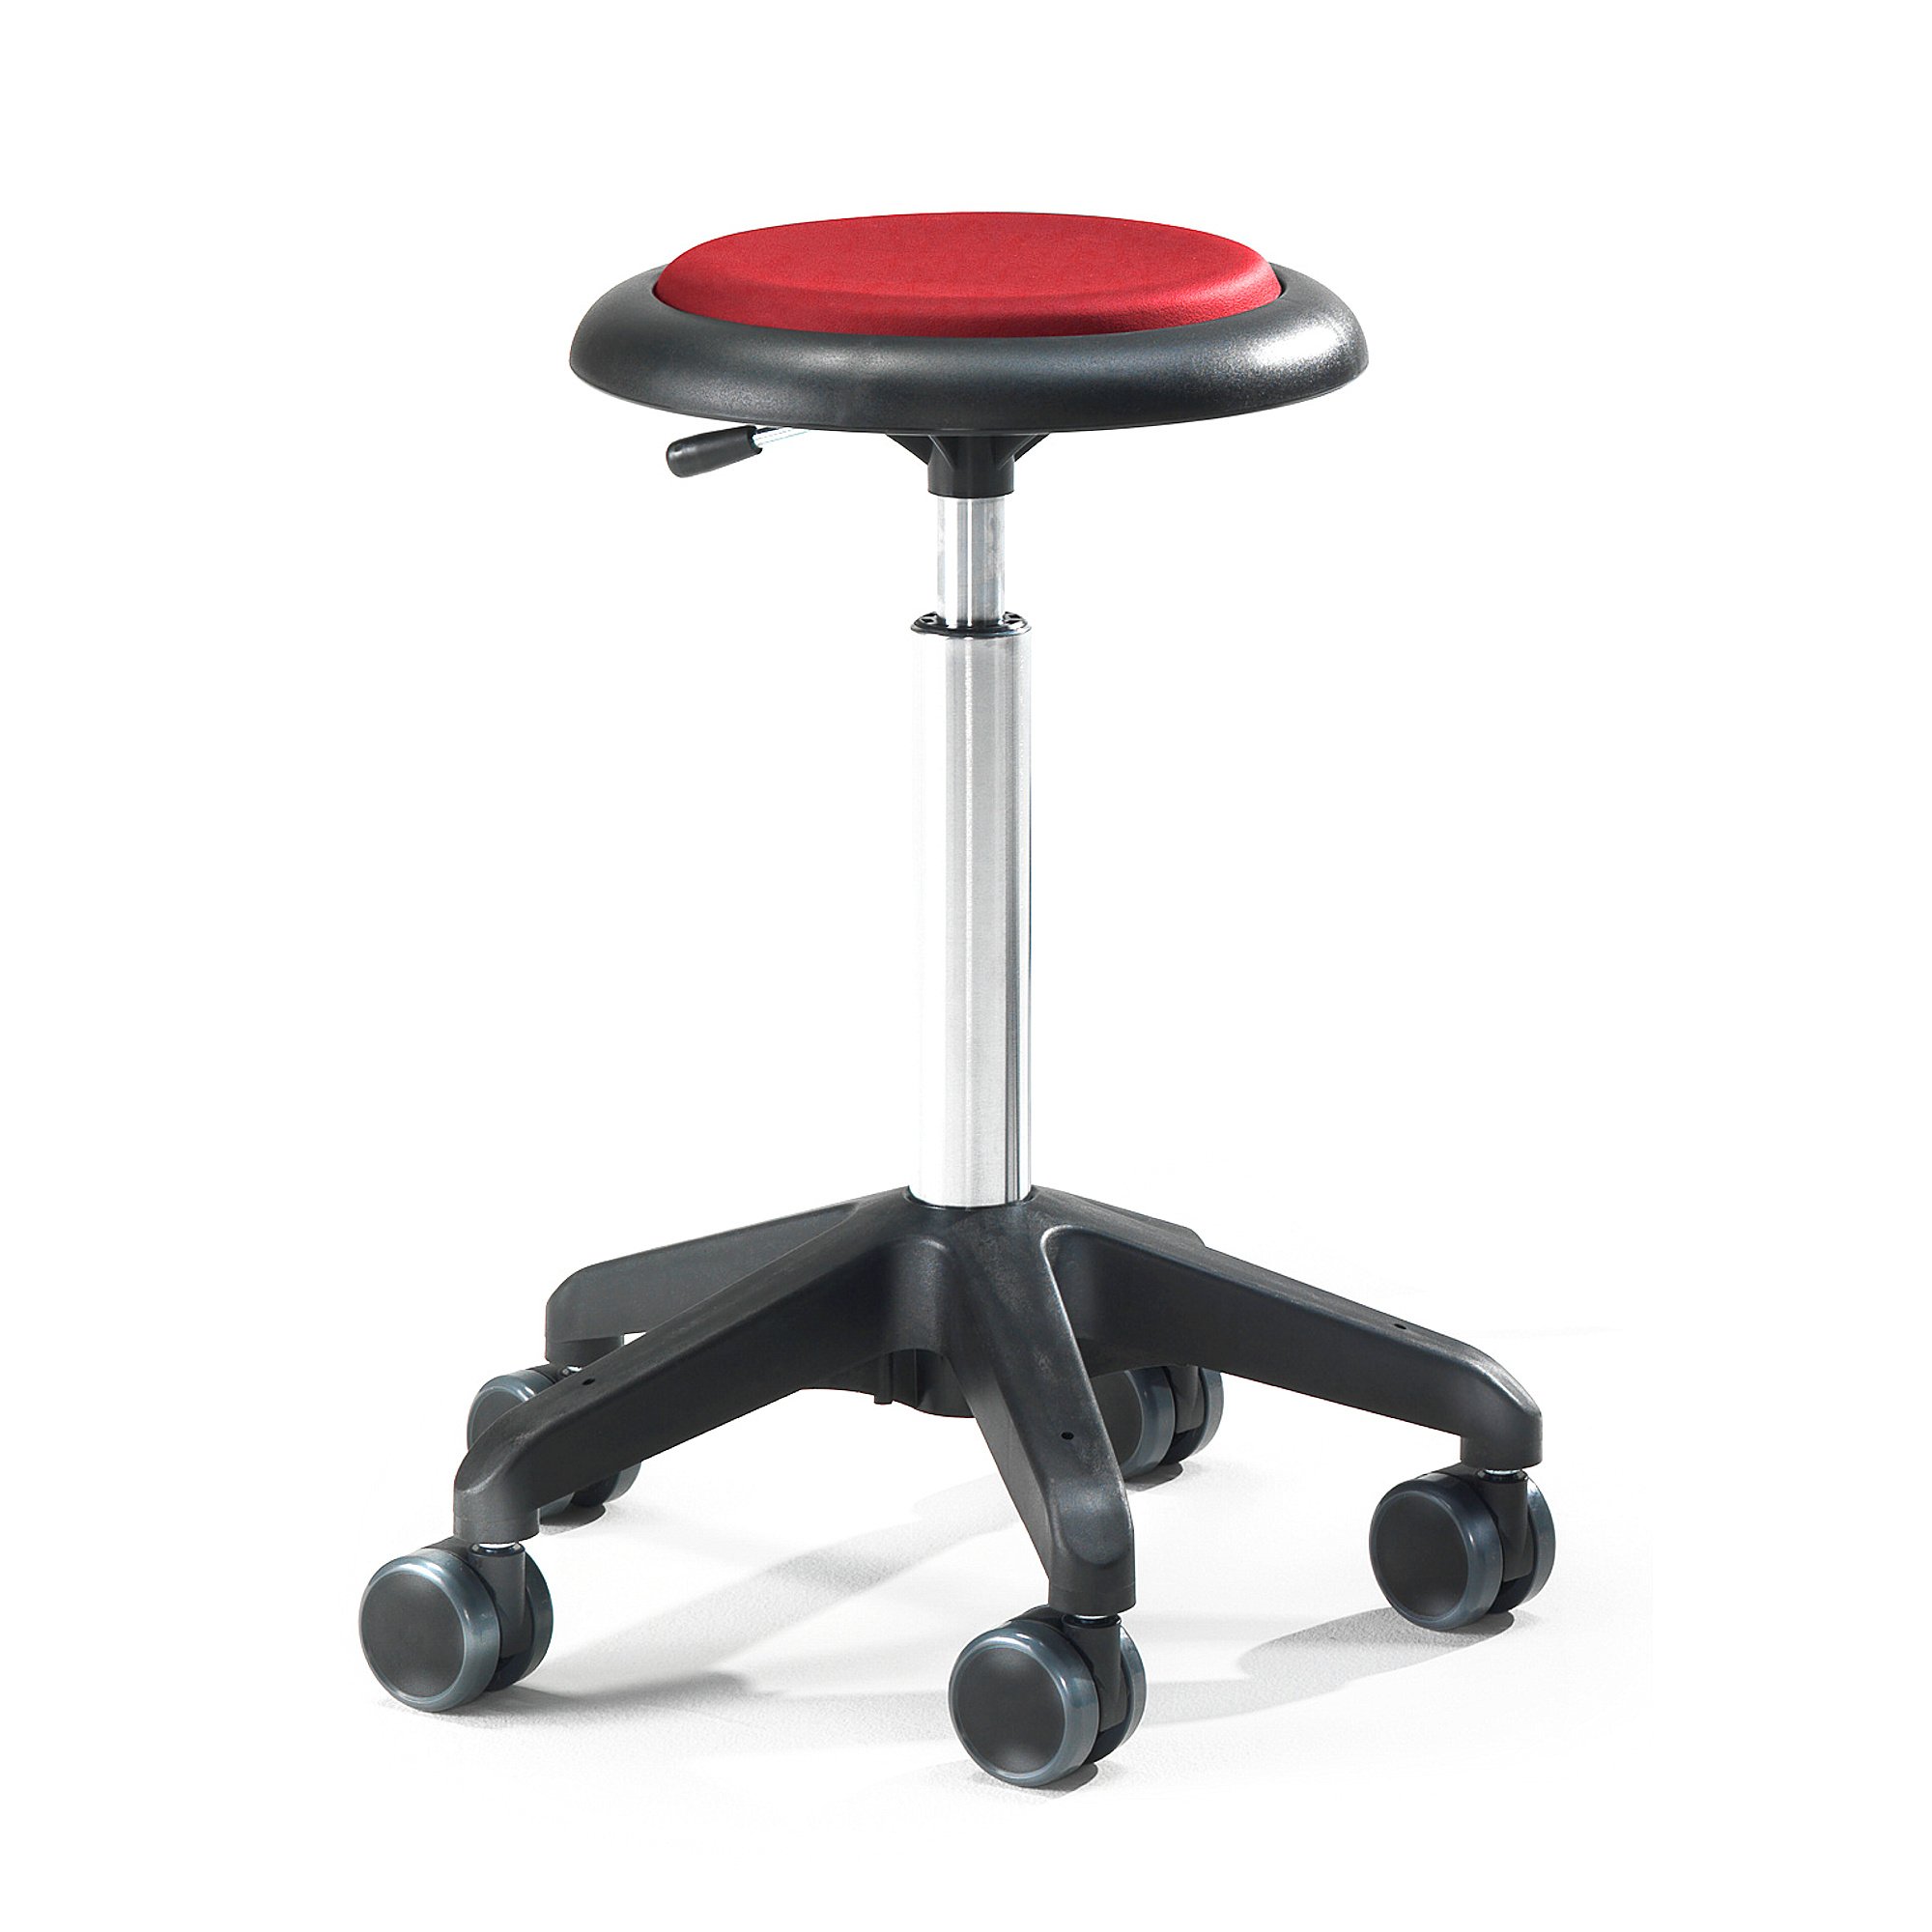 Pracovní stolička DIEGO, výška 440-570 mm, mikrovlákno, červená